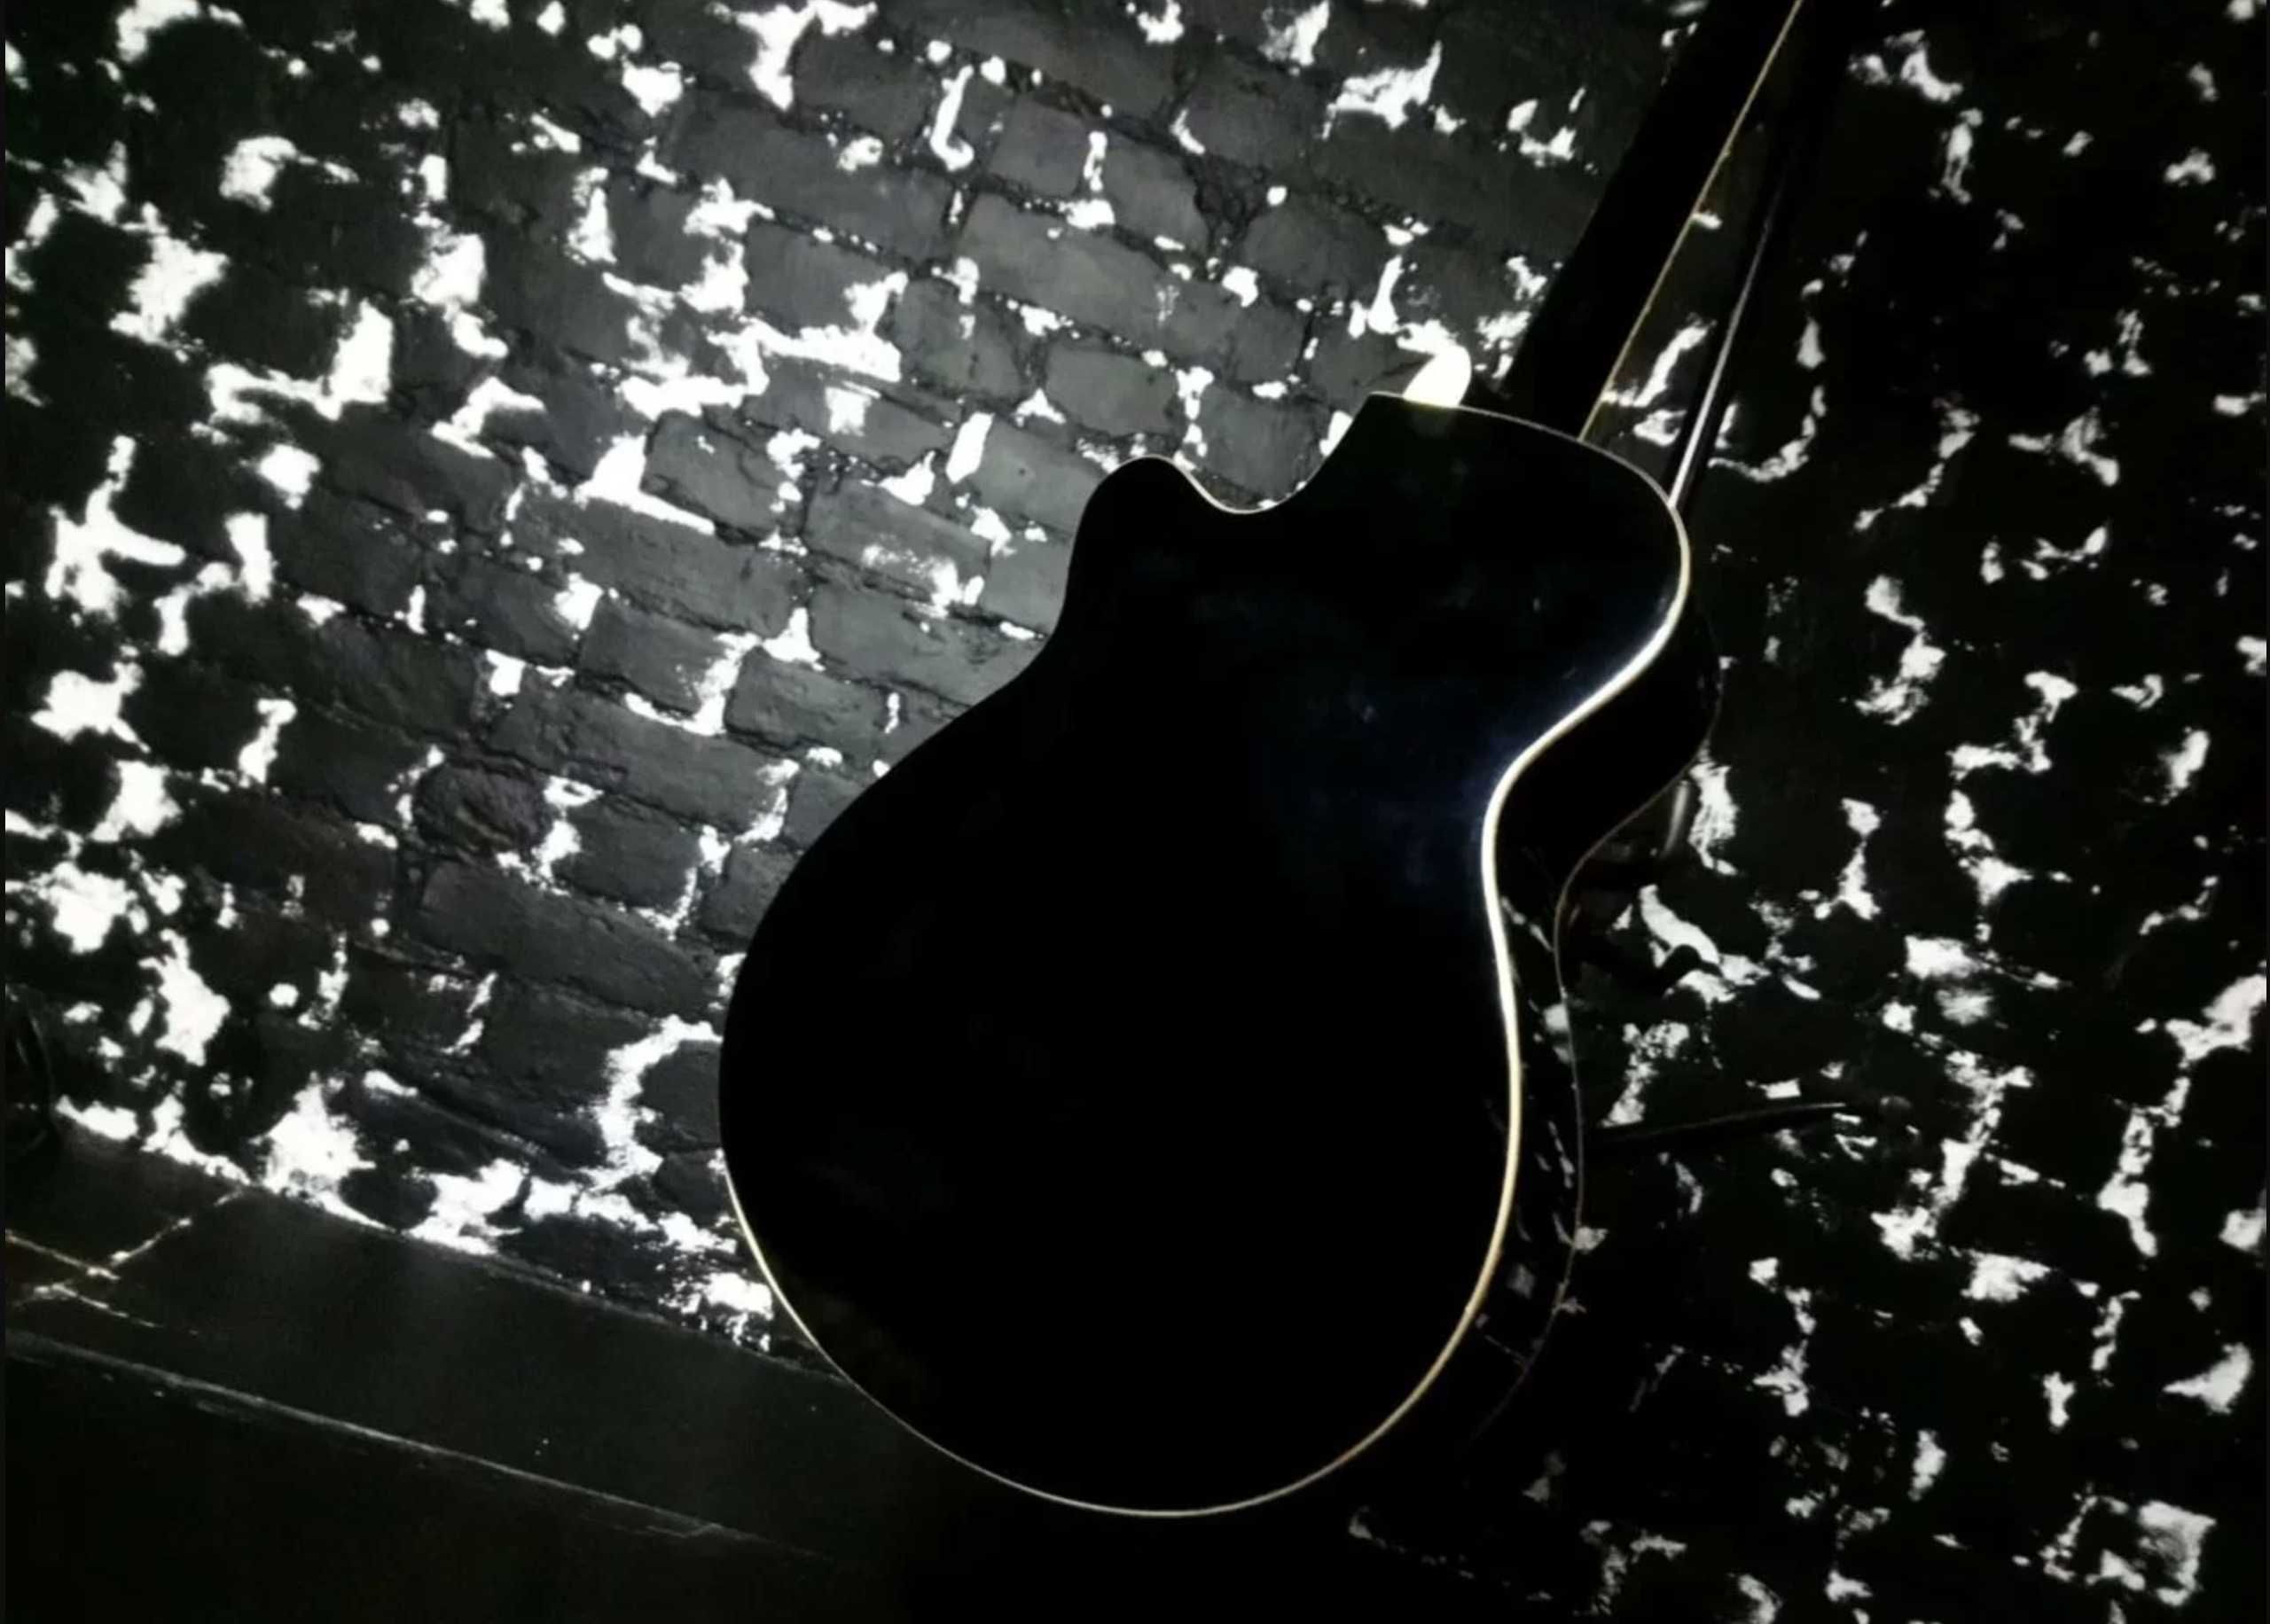 акустическая японская полноразмерная гитара 4/4 черная глянцевая новая